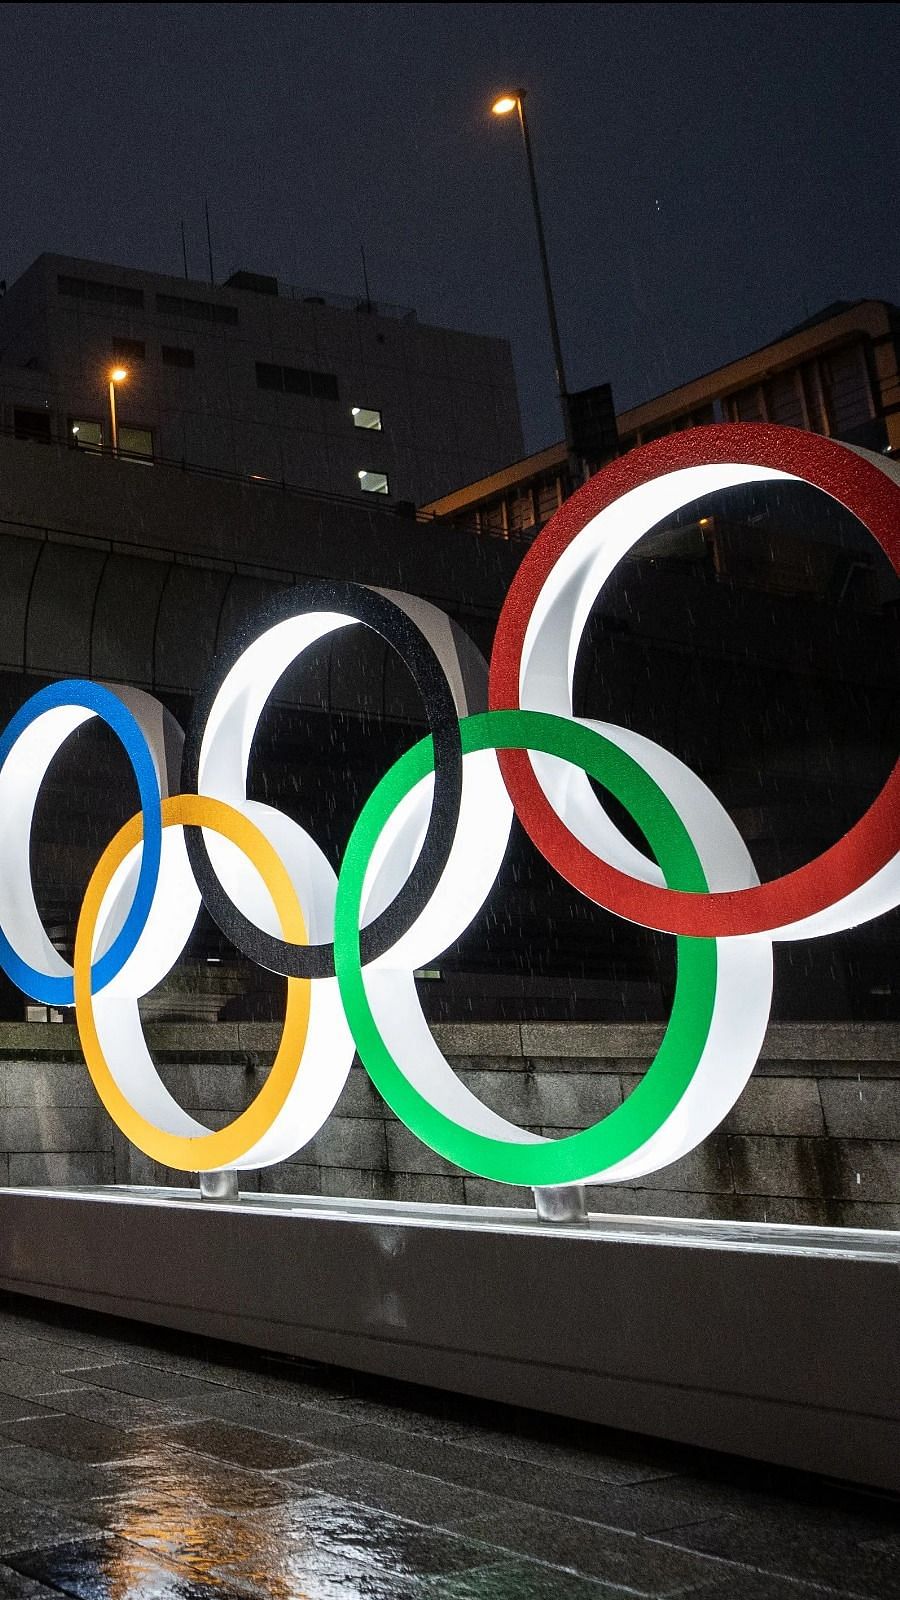 NBC 'Darn Close' to Booking $1 Billion in Paris Olympics Ad Sales